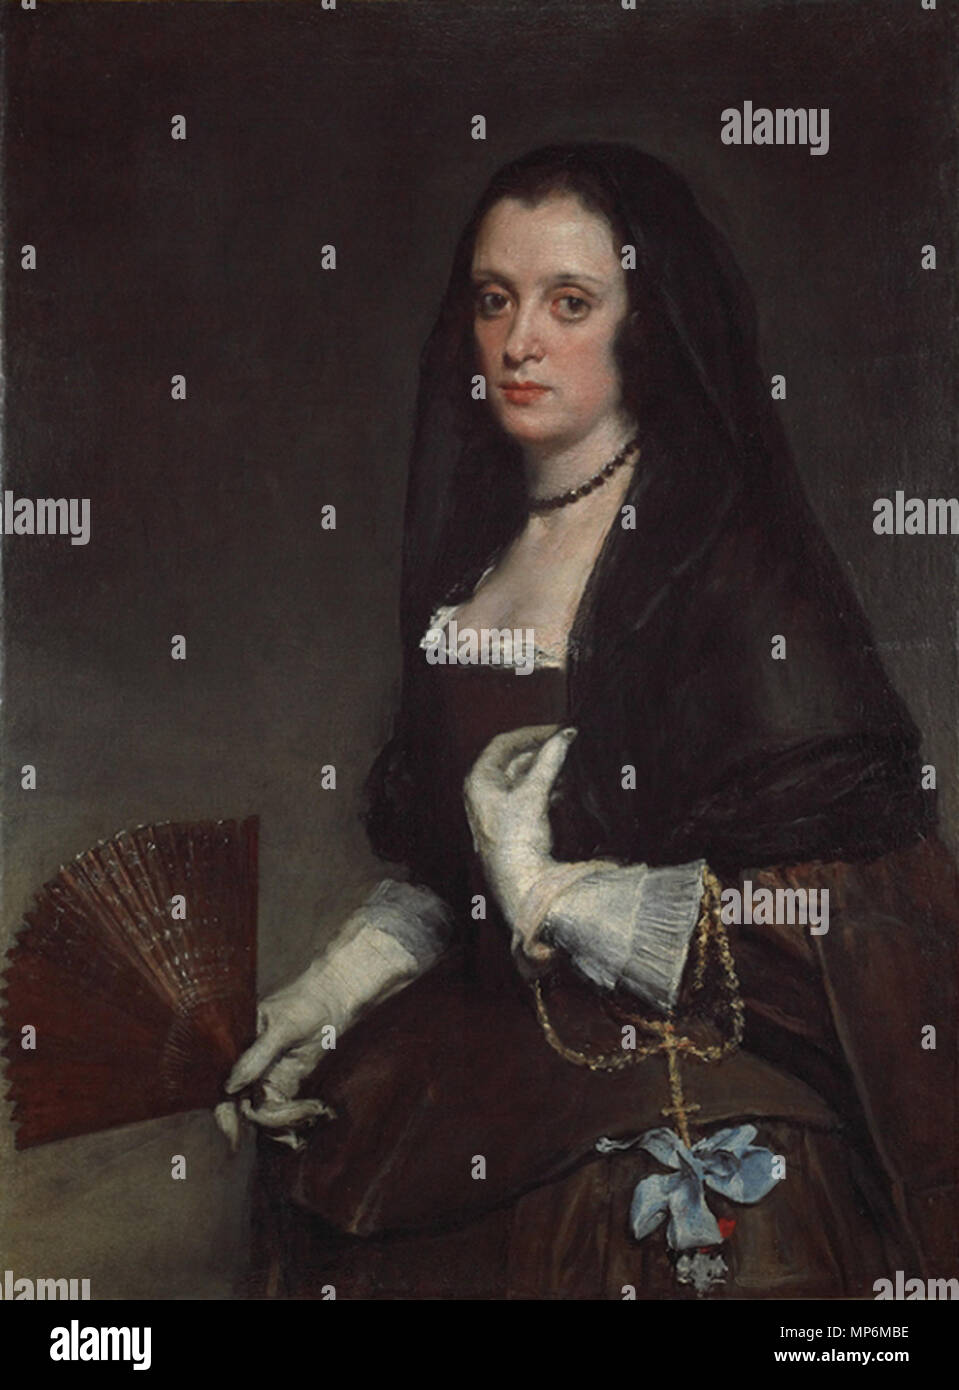 783 La dama del abanico, por Diego Velázquez Stock Photo